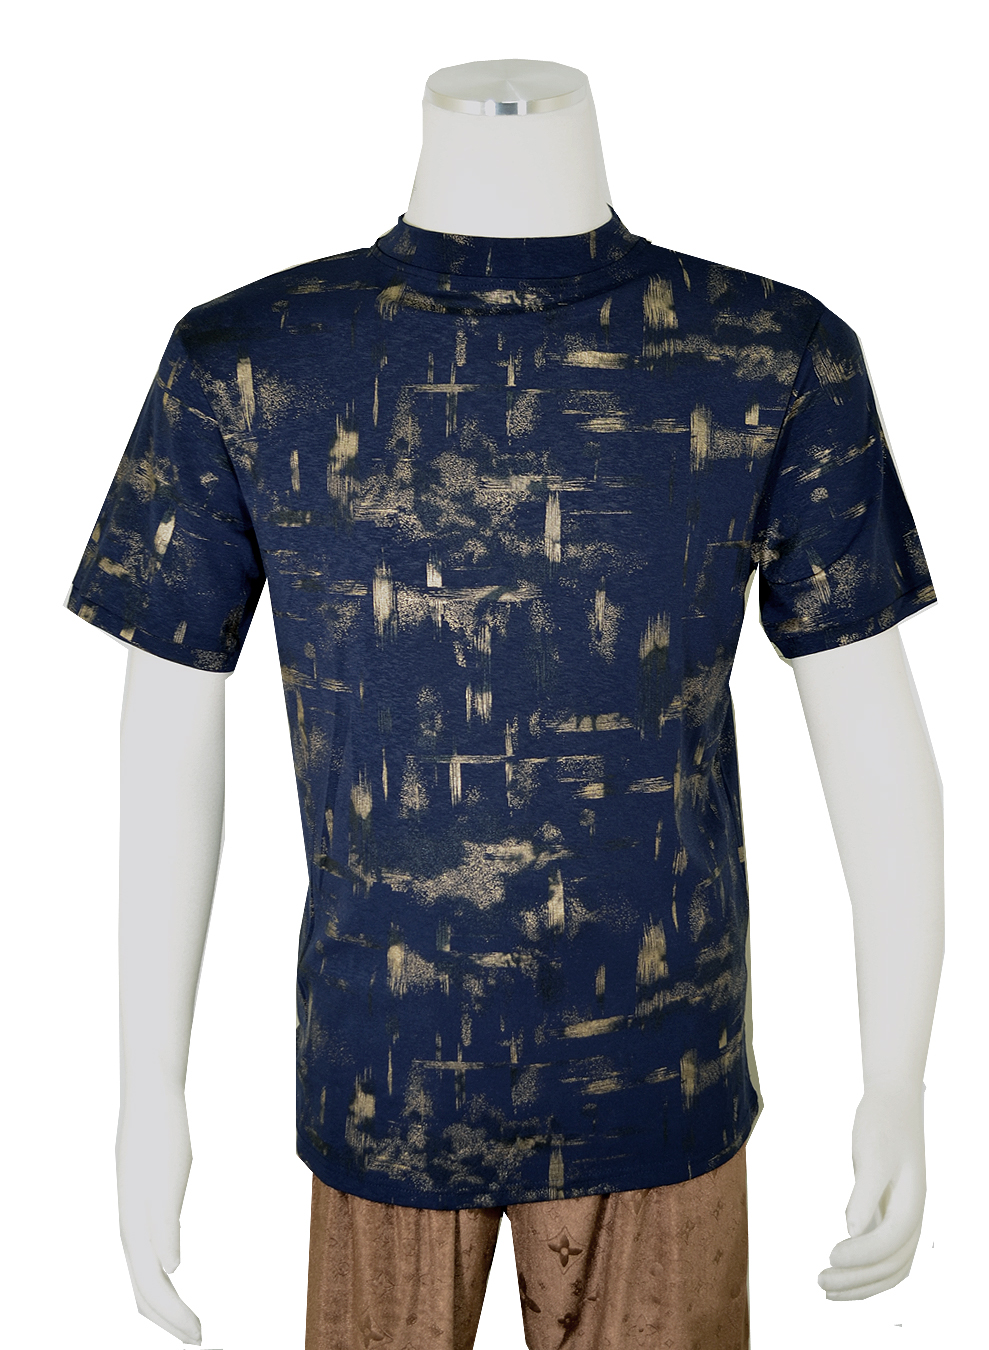 Cielo Navy / Metallic Gold Tricot Short Sleeve Crew Neck Shirt K1845